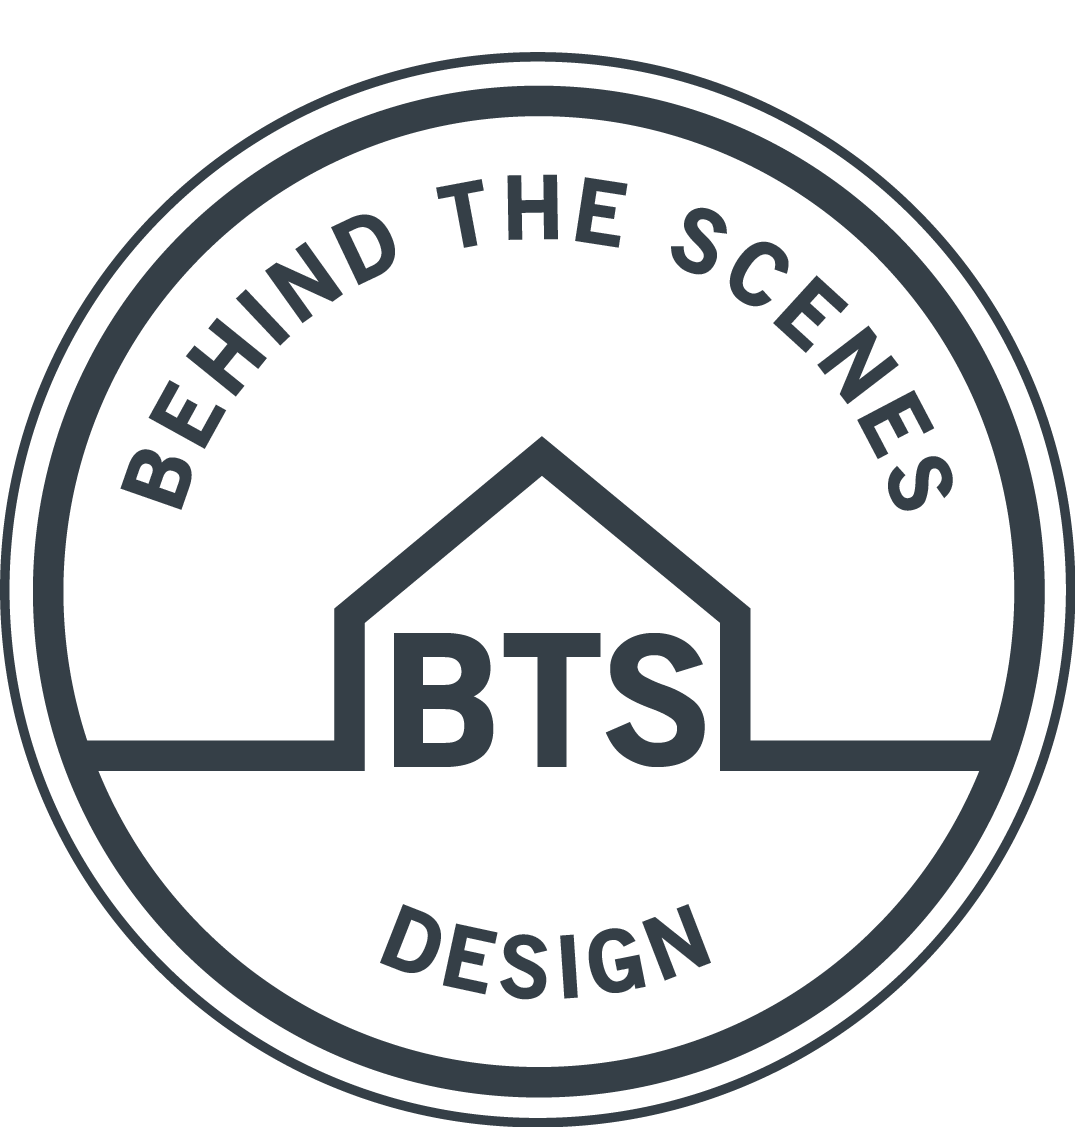 Behind The Scenes Design, Inc.